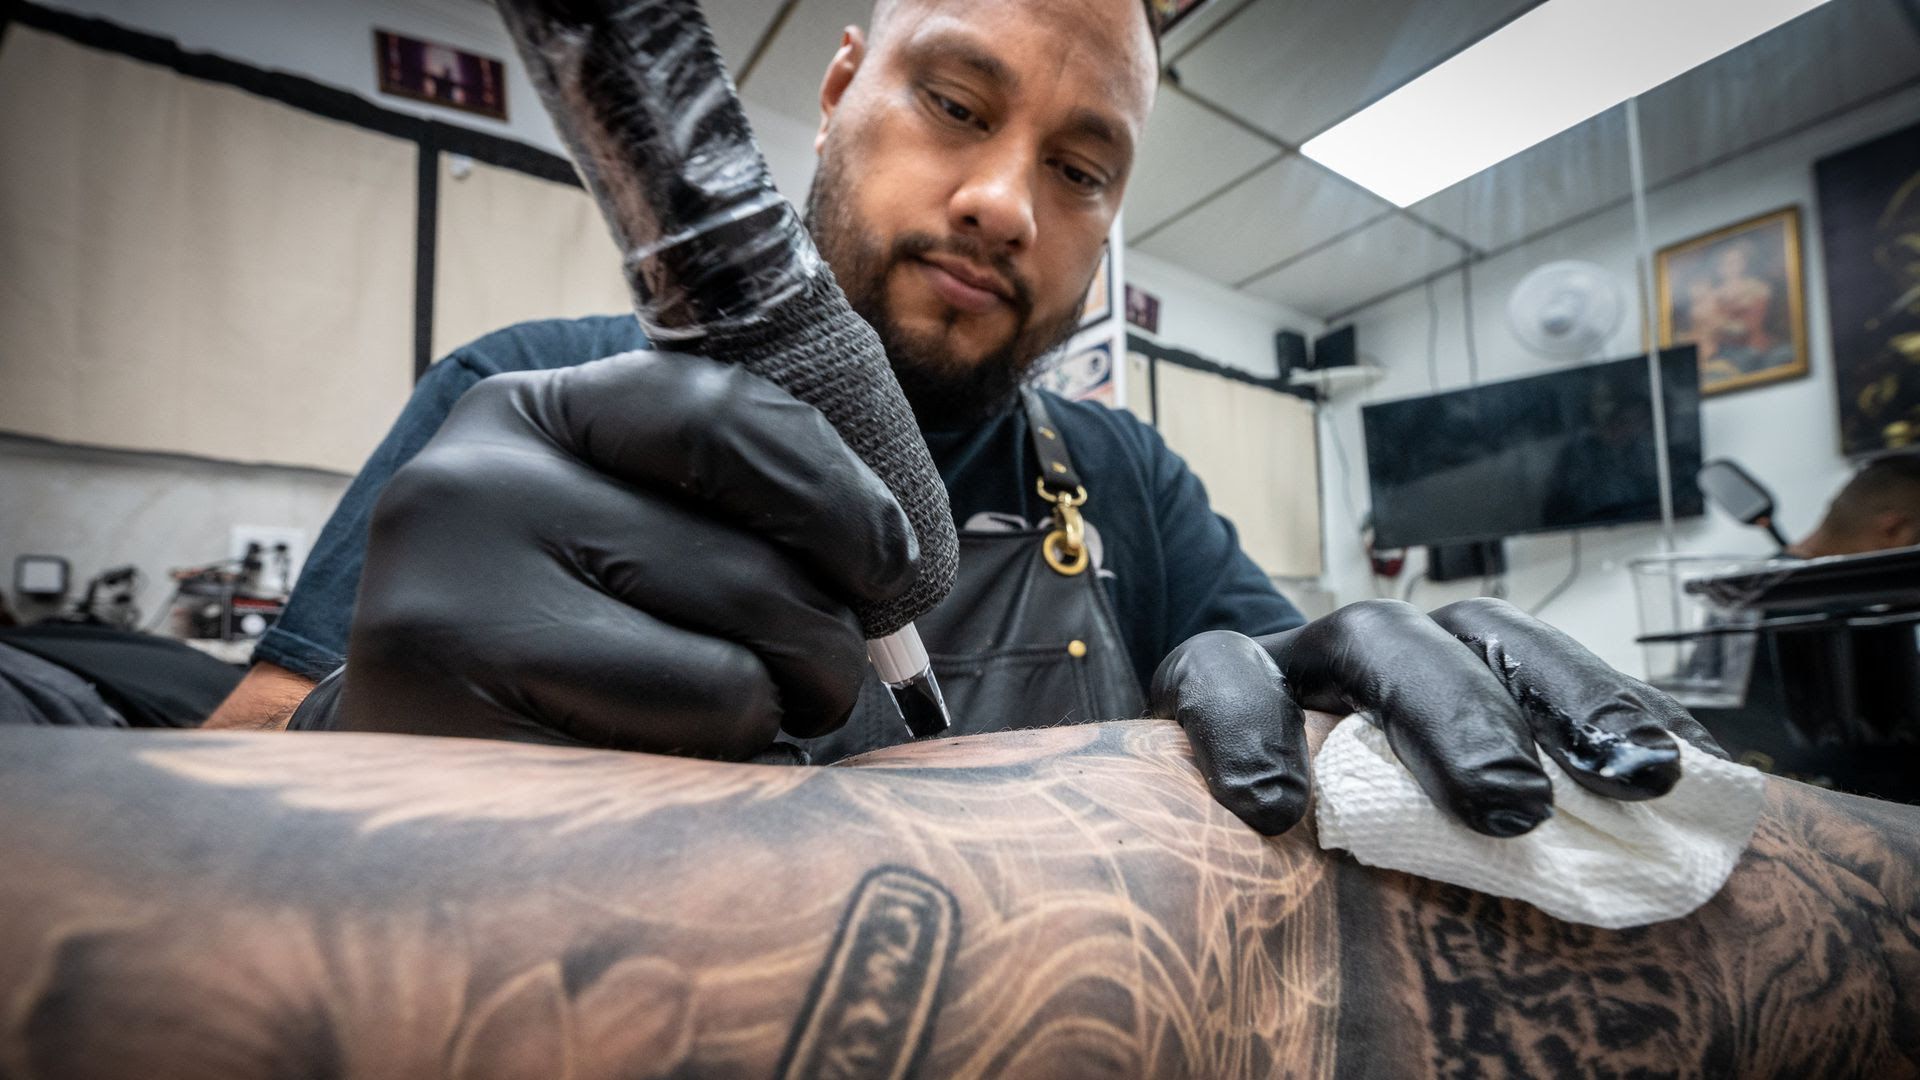 Latino tattoo art makes waves in .